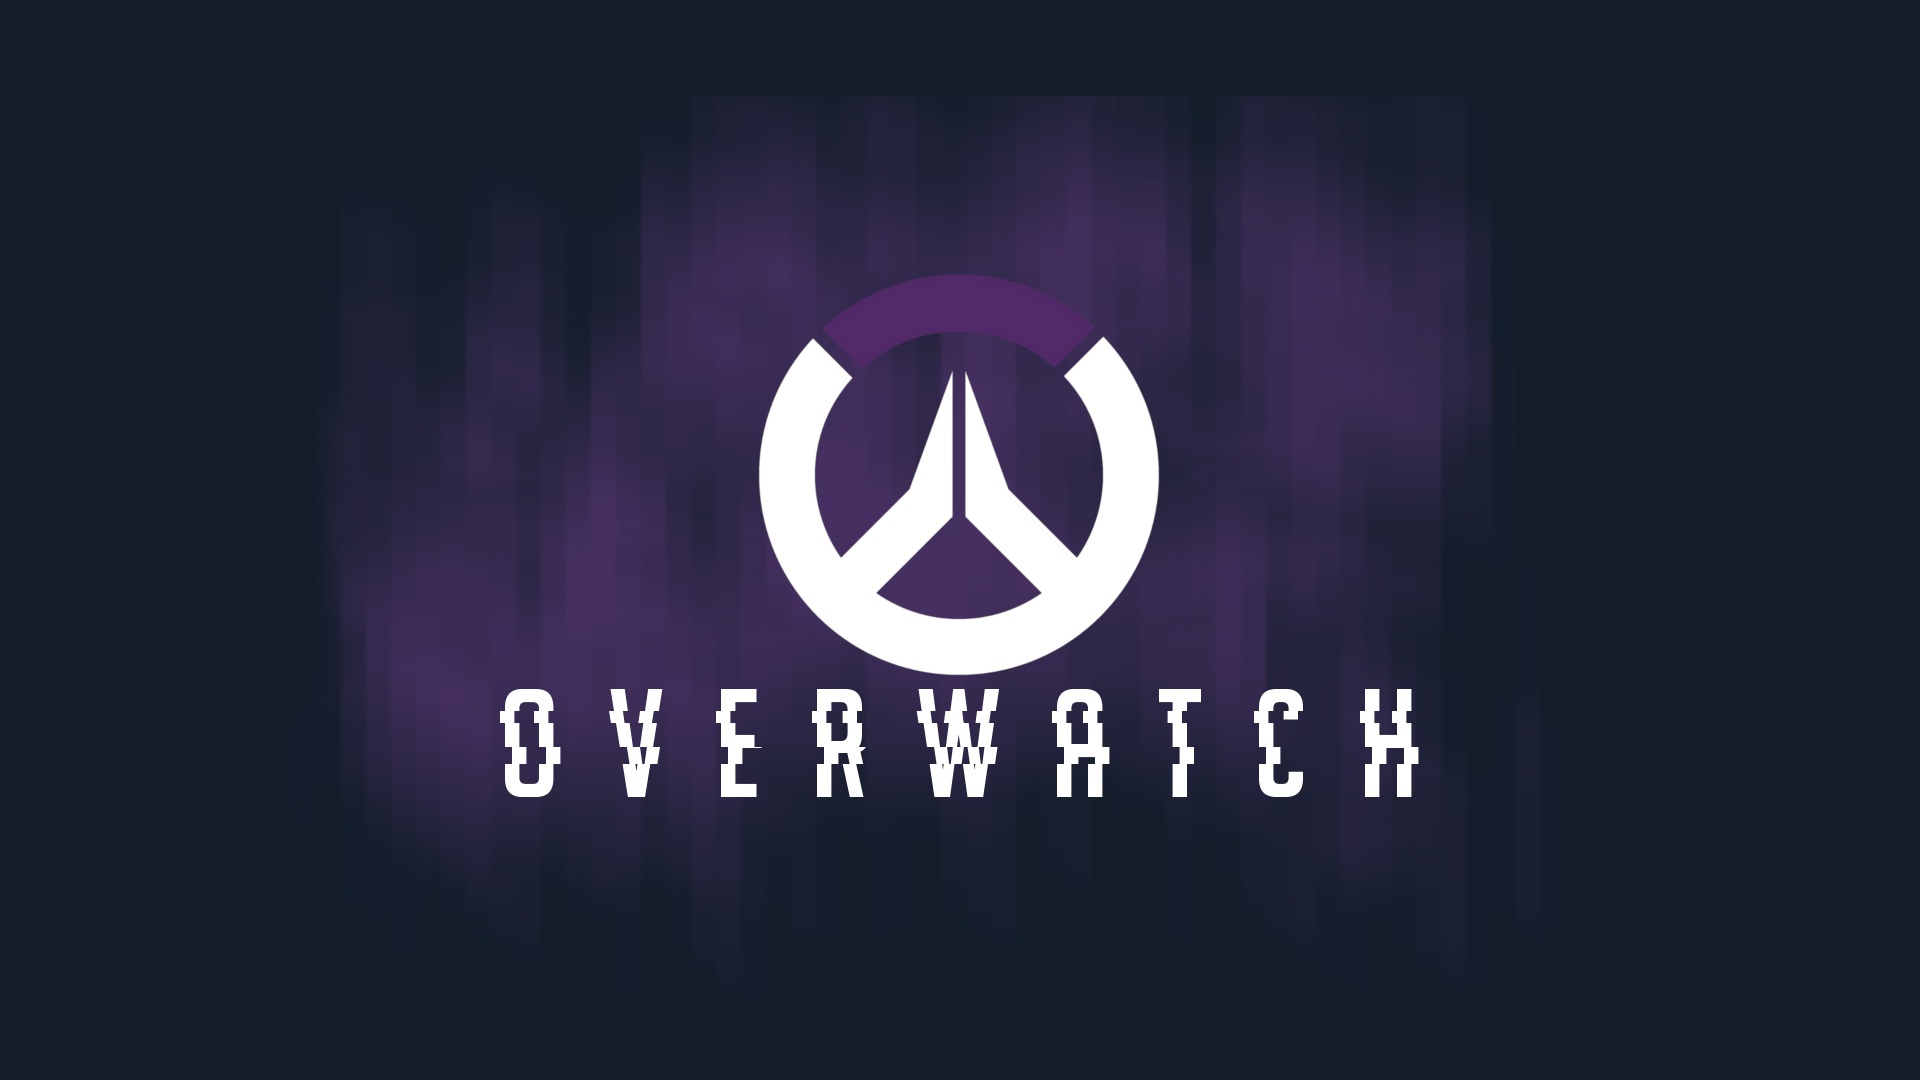 Overwatch Logo Wallpaper